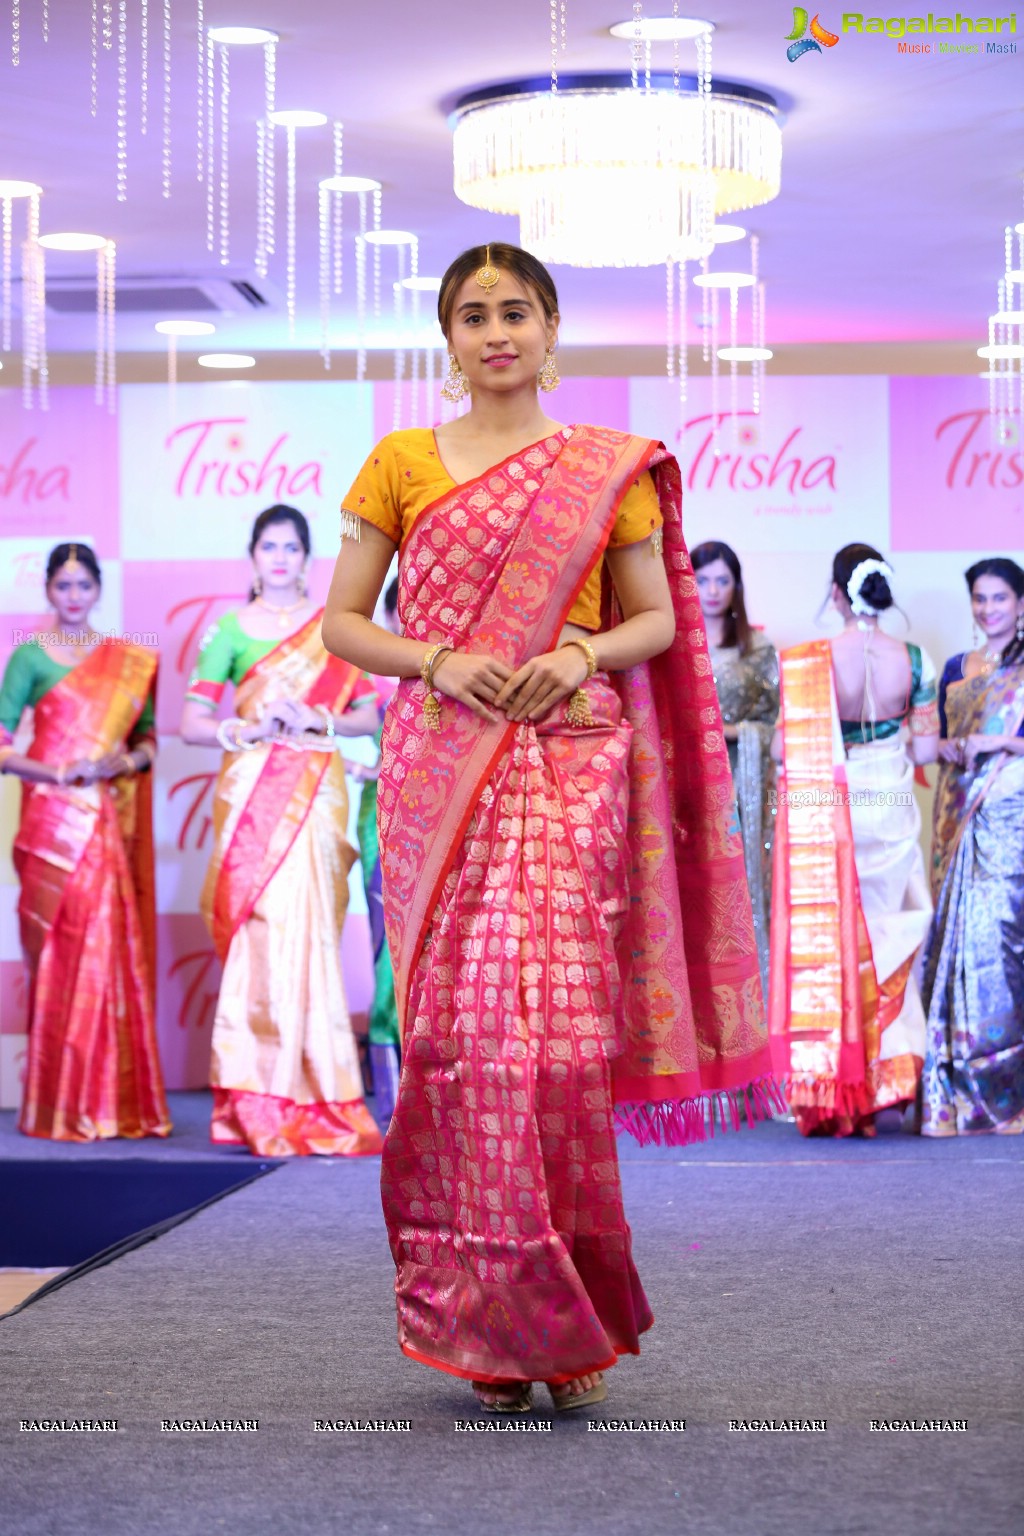 Timeless Traditions - An Enchanting Fashion Showcase by Designer Amrita Mishra at Trisha Boutique